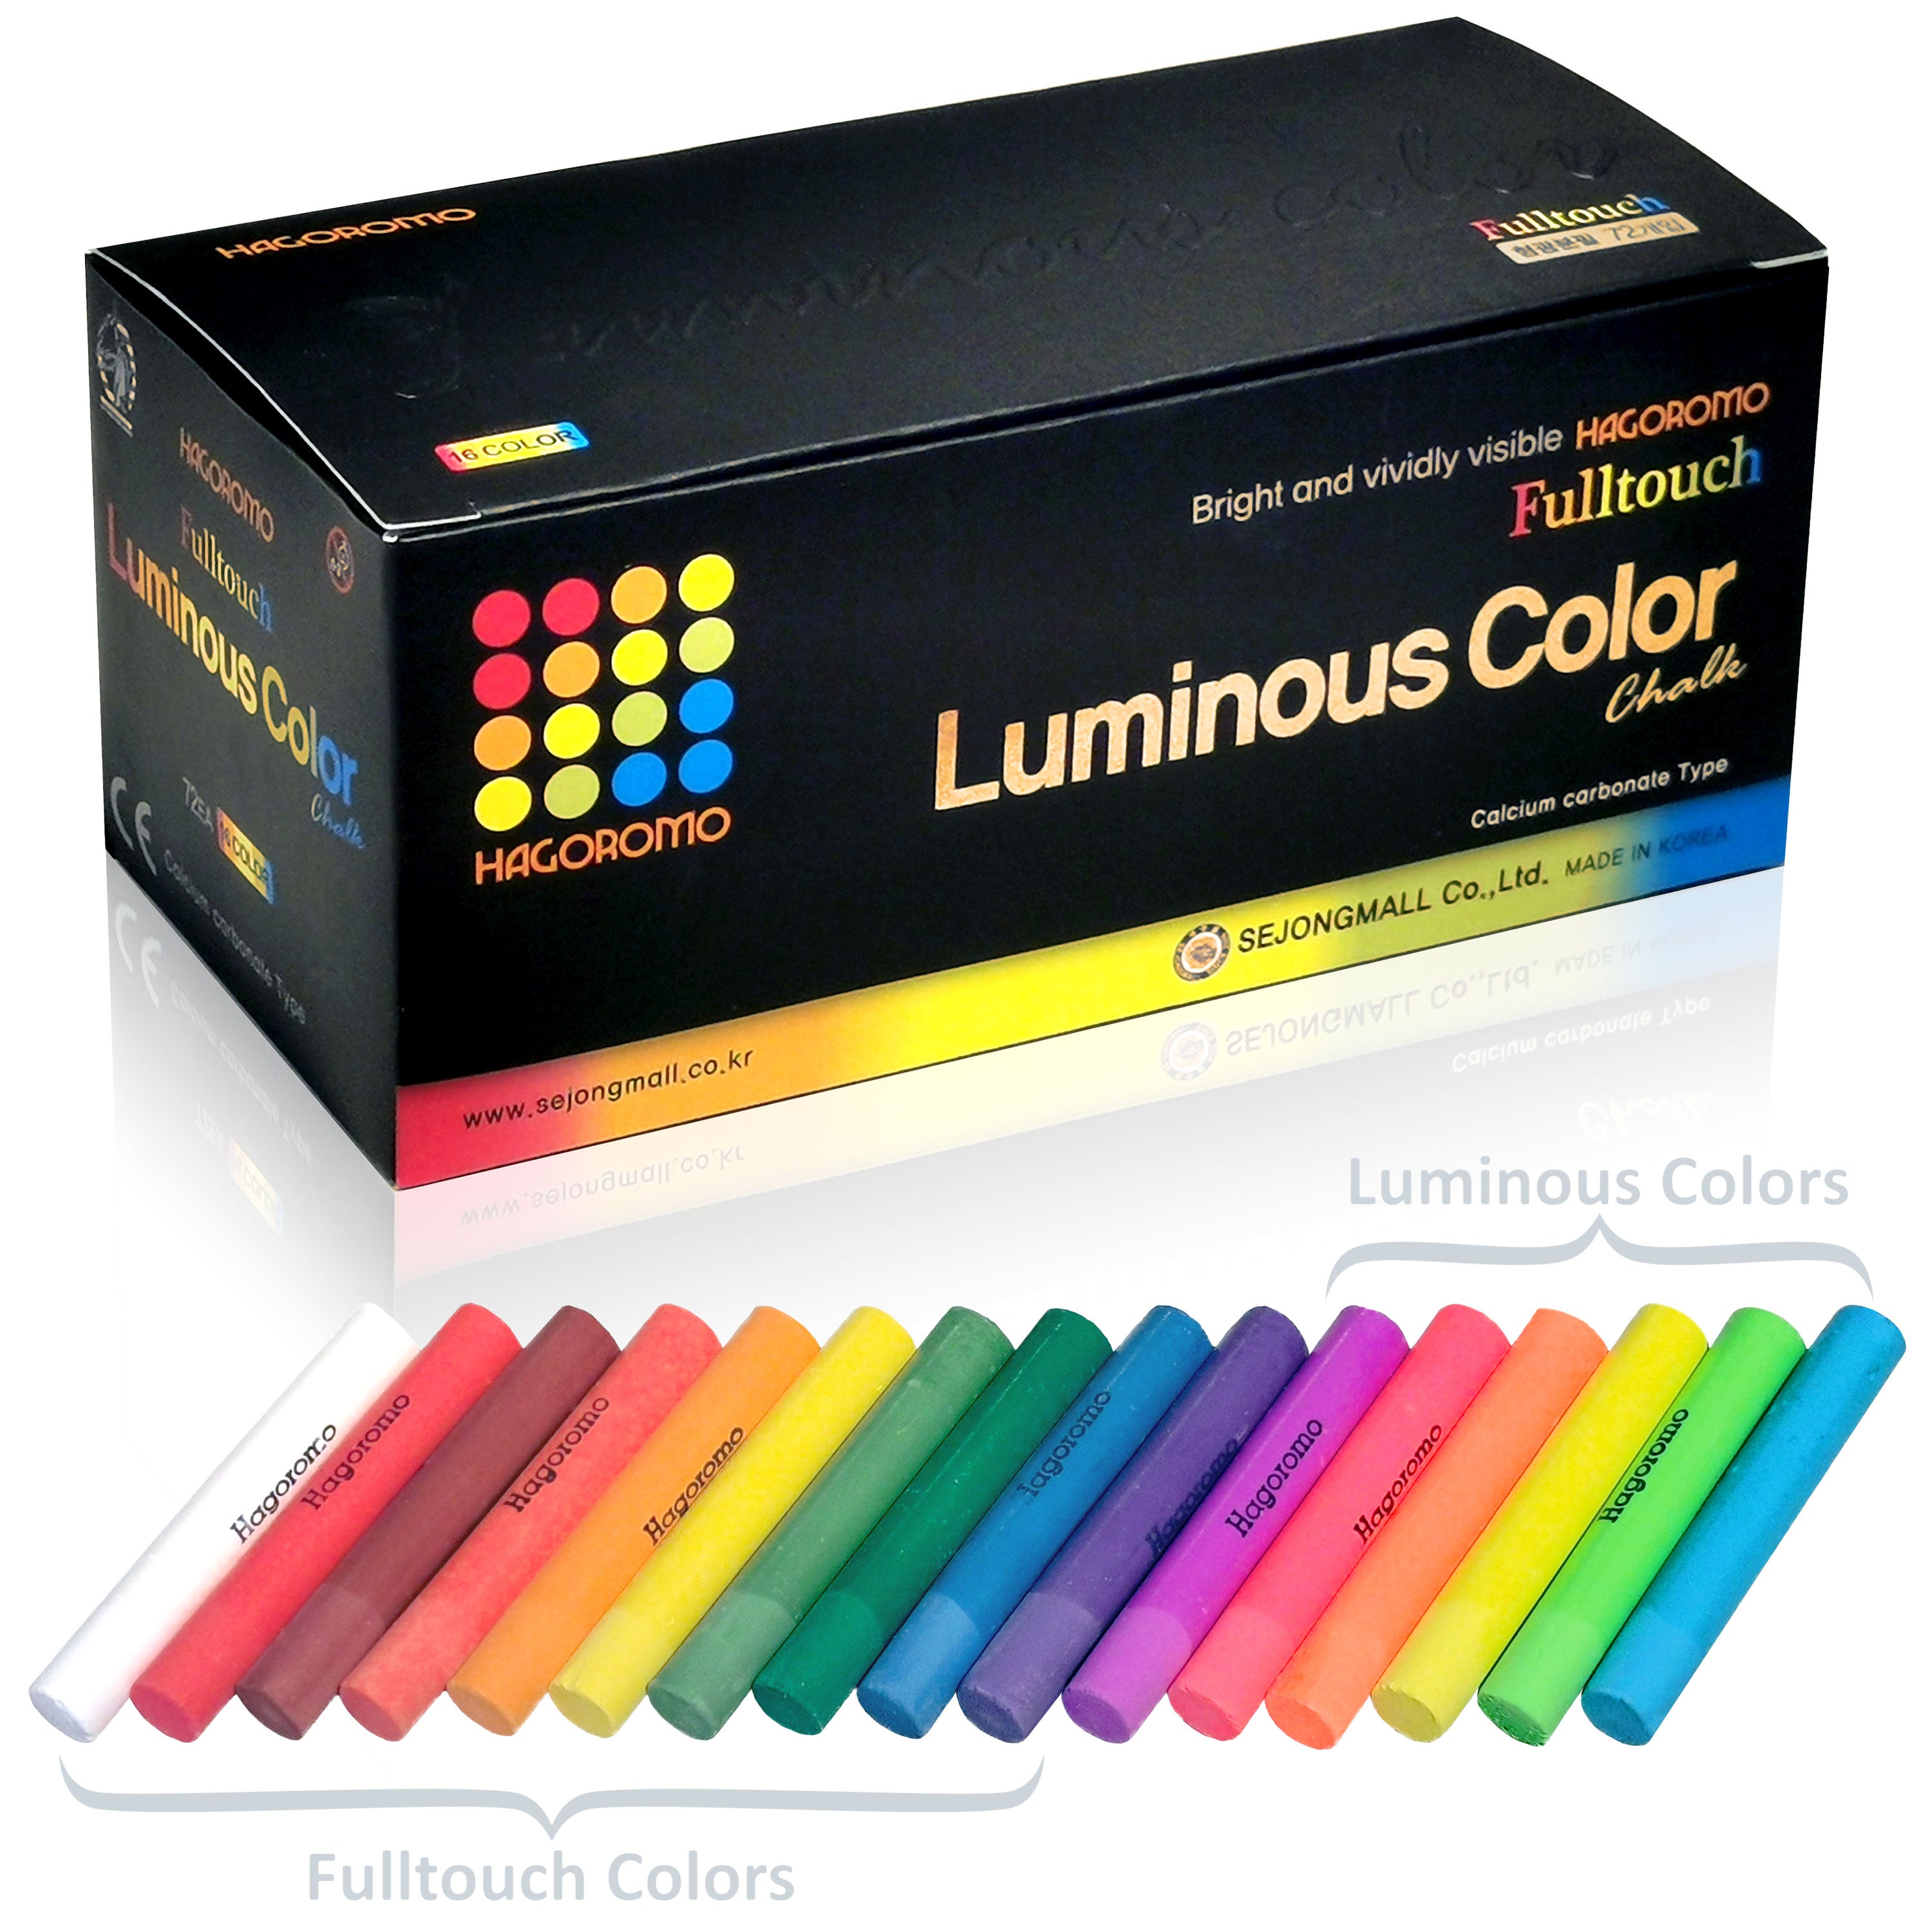 HAGOROMO Fulltouch x Luminous Chalk 10+6 Colors 72 PCS [Limited Edition] - hagoromo.shop